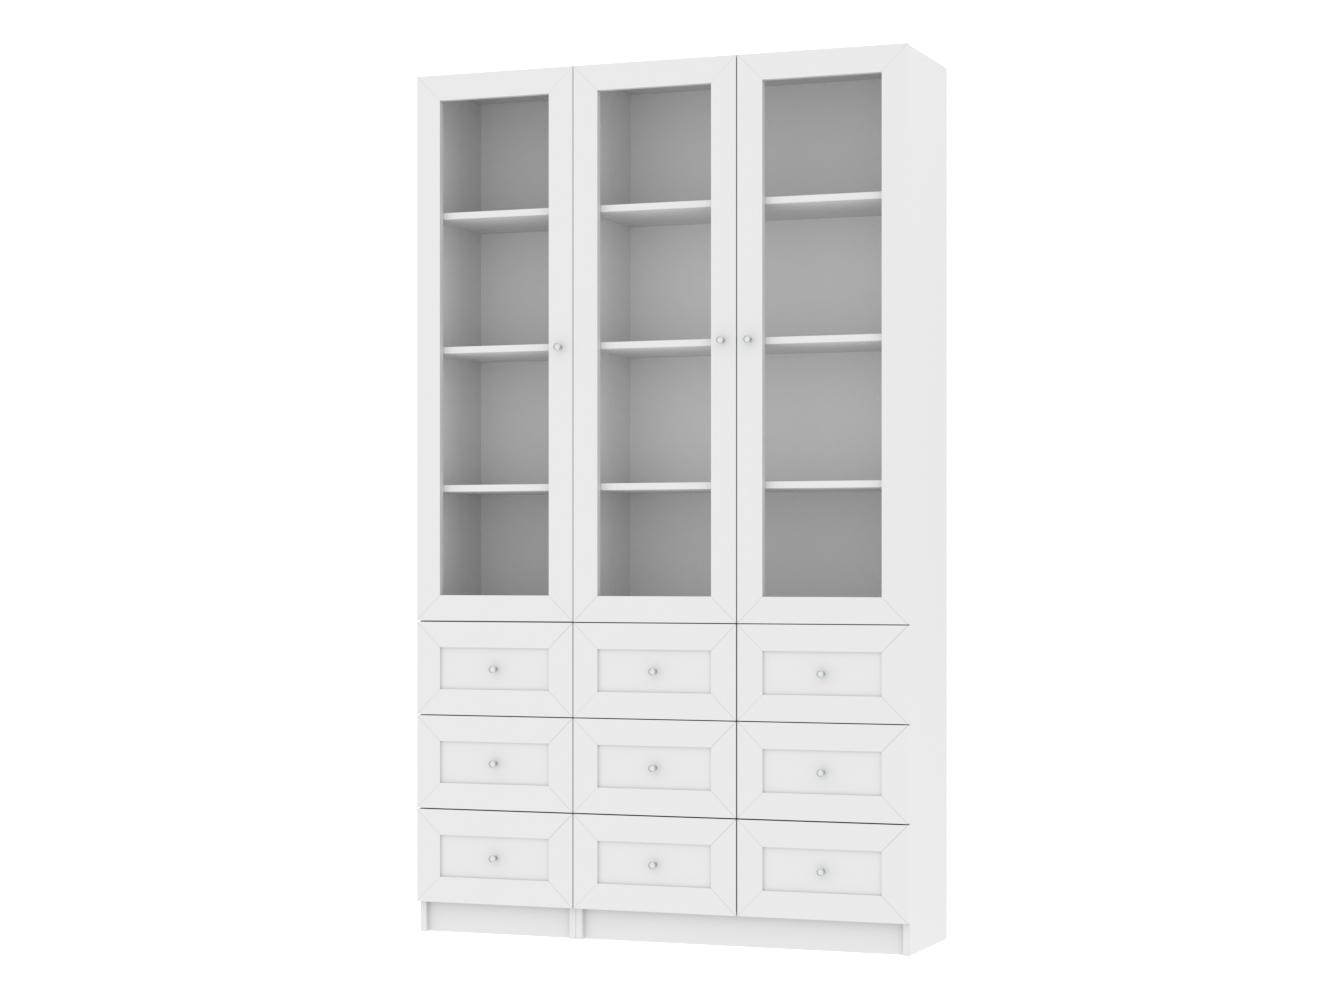  Книжный шкаф Билли 326 white ИКЕА (IKEA) изображение товара